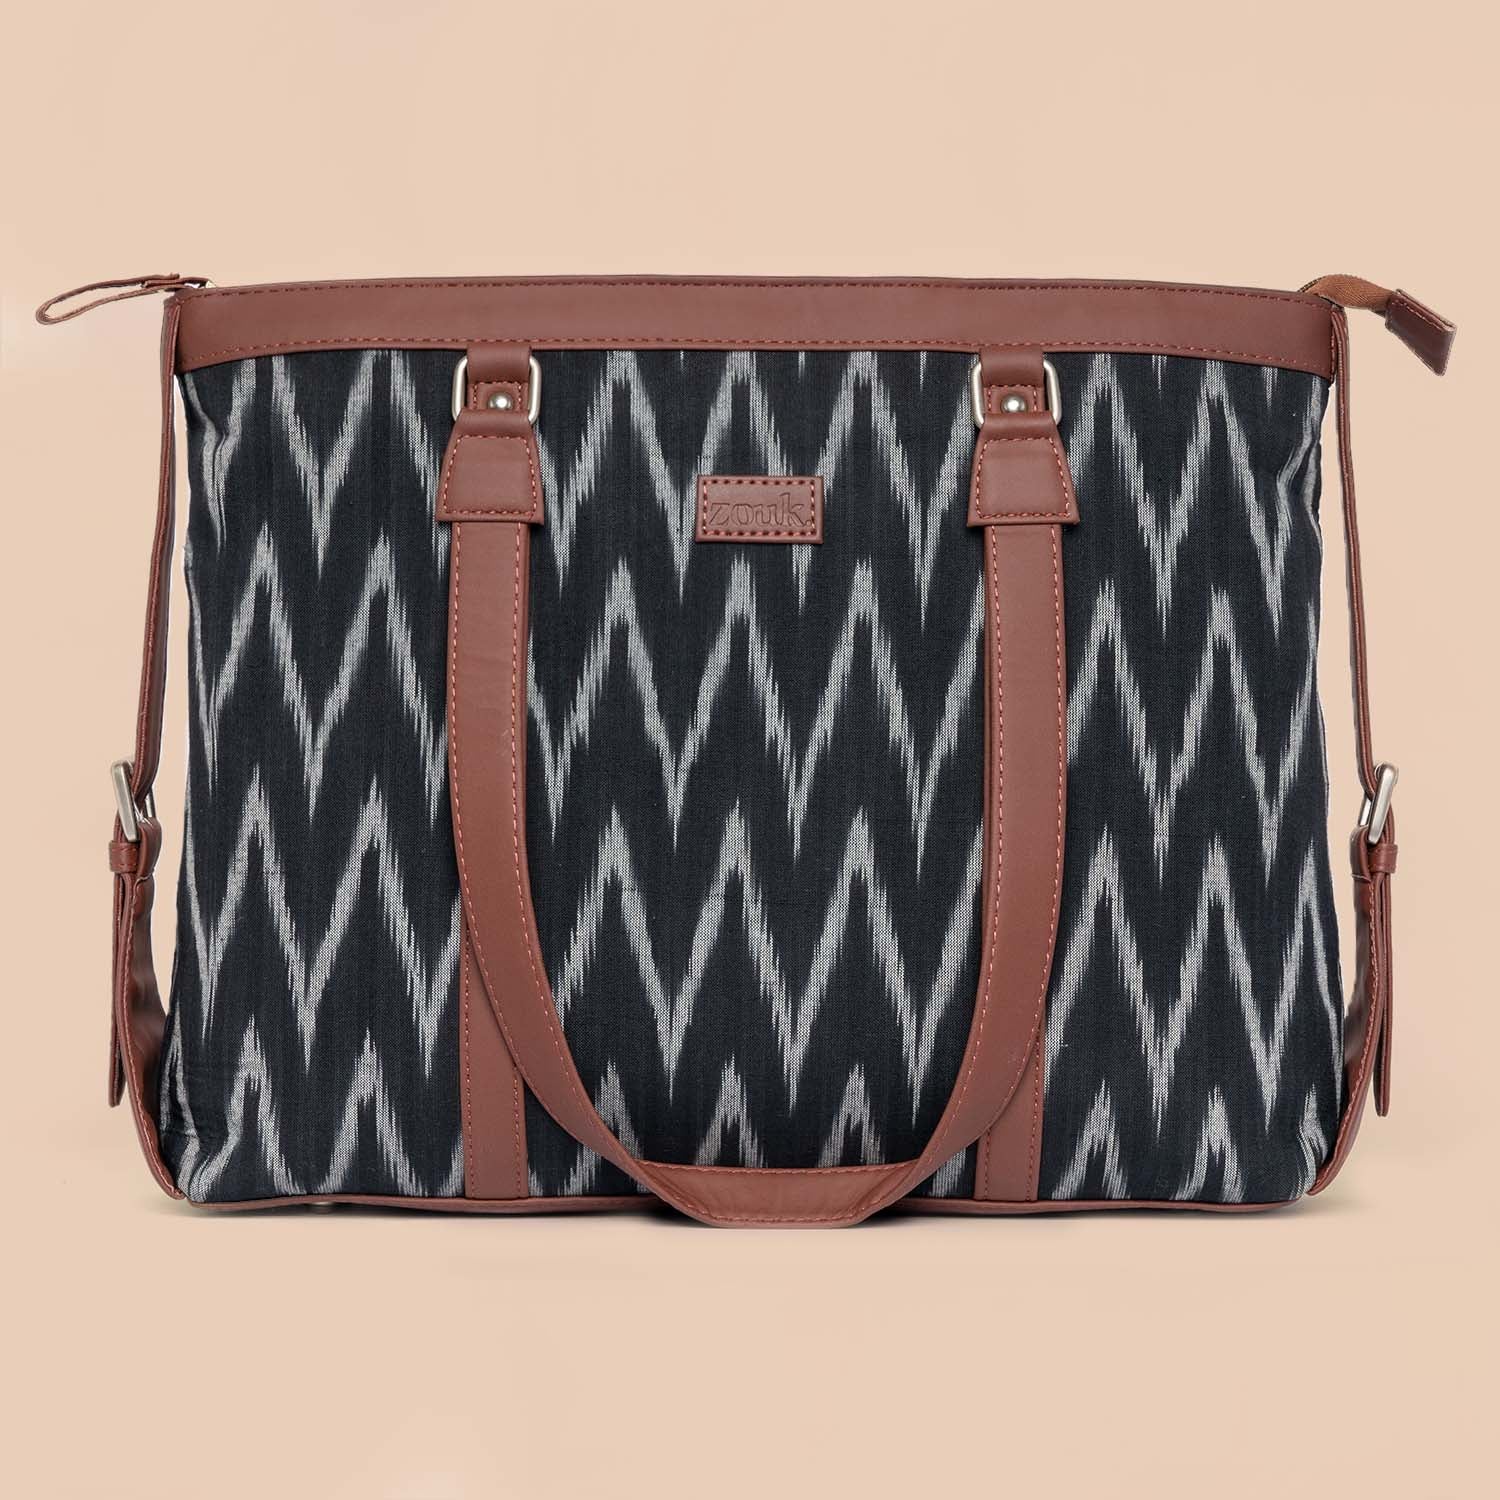 Buy Genuine Hunter Leather Shopping Bag Shoulder Tote bag Handbag Purse Sale  at Amazon.in